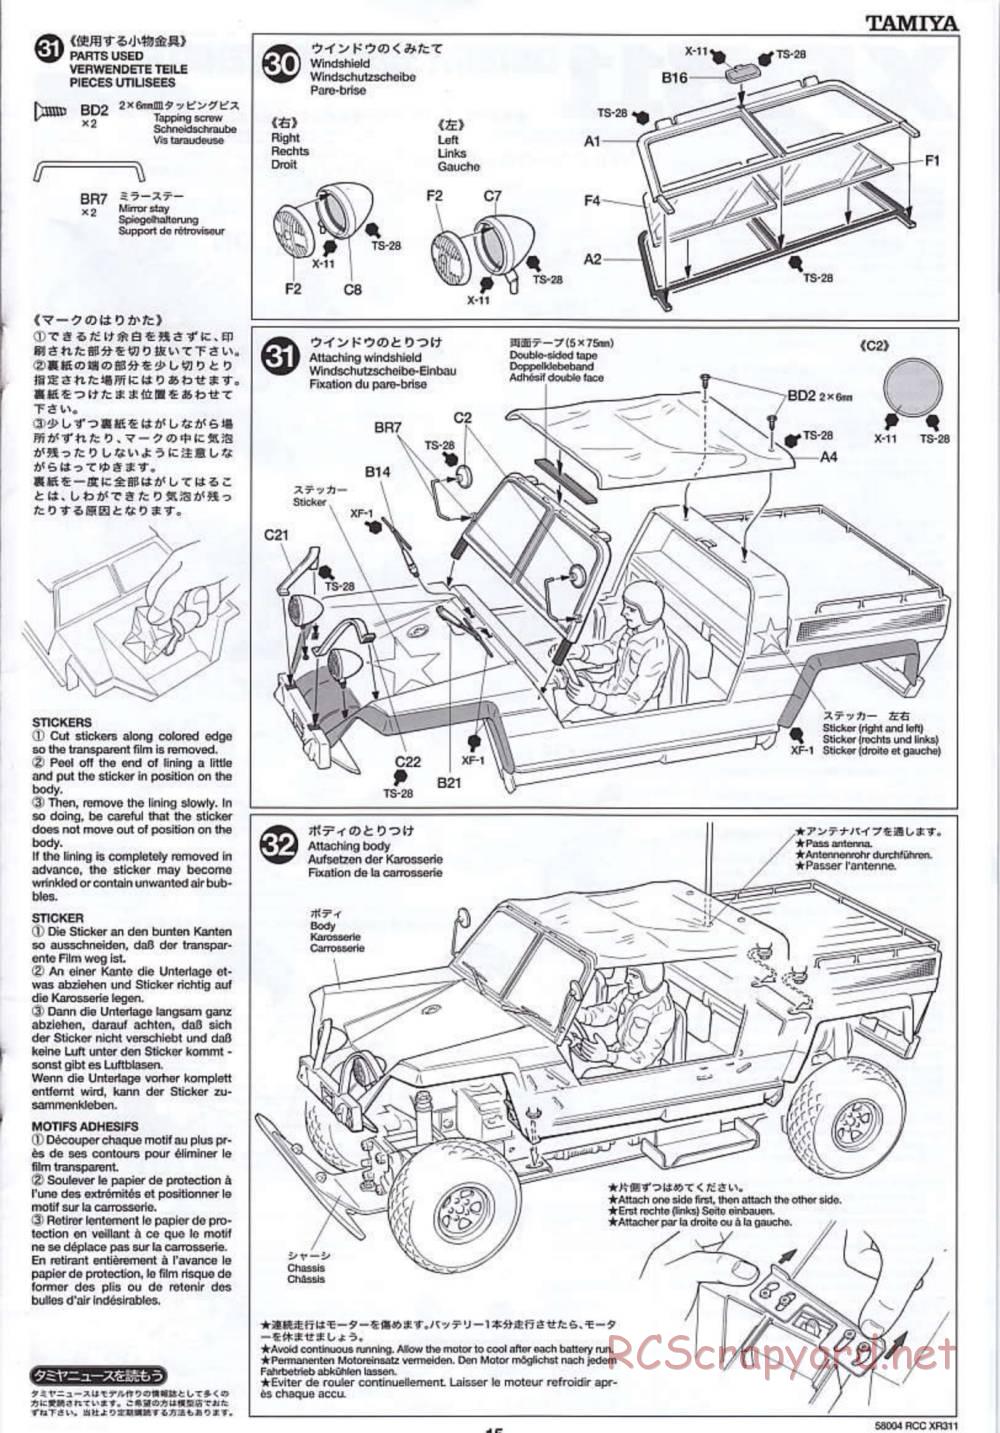 Tamiya - XR311 Combat Support Vehicle (2000) - 58004 - Manual - Page 16